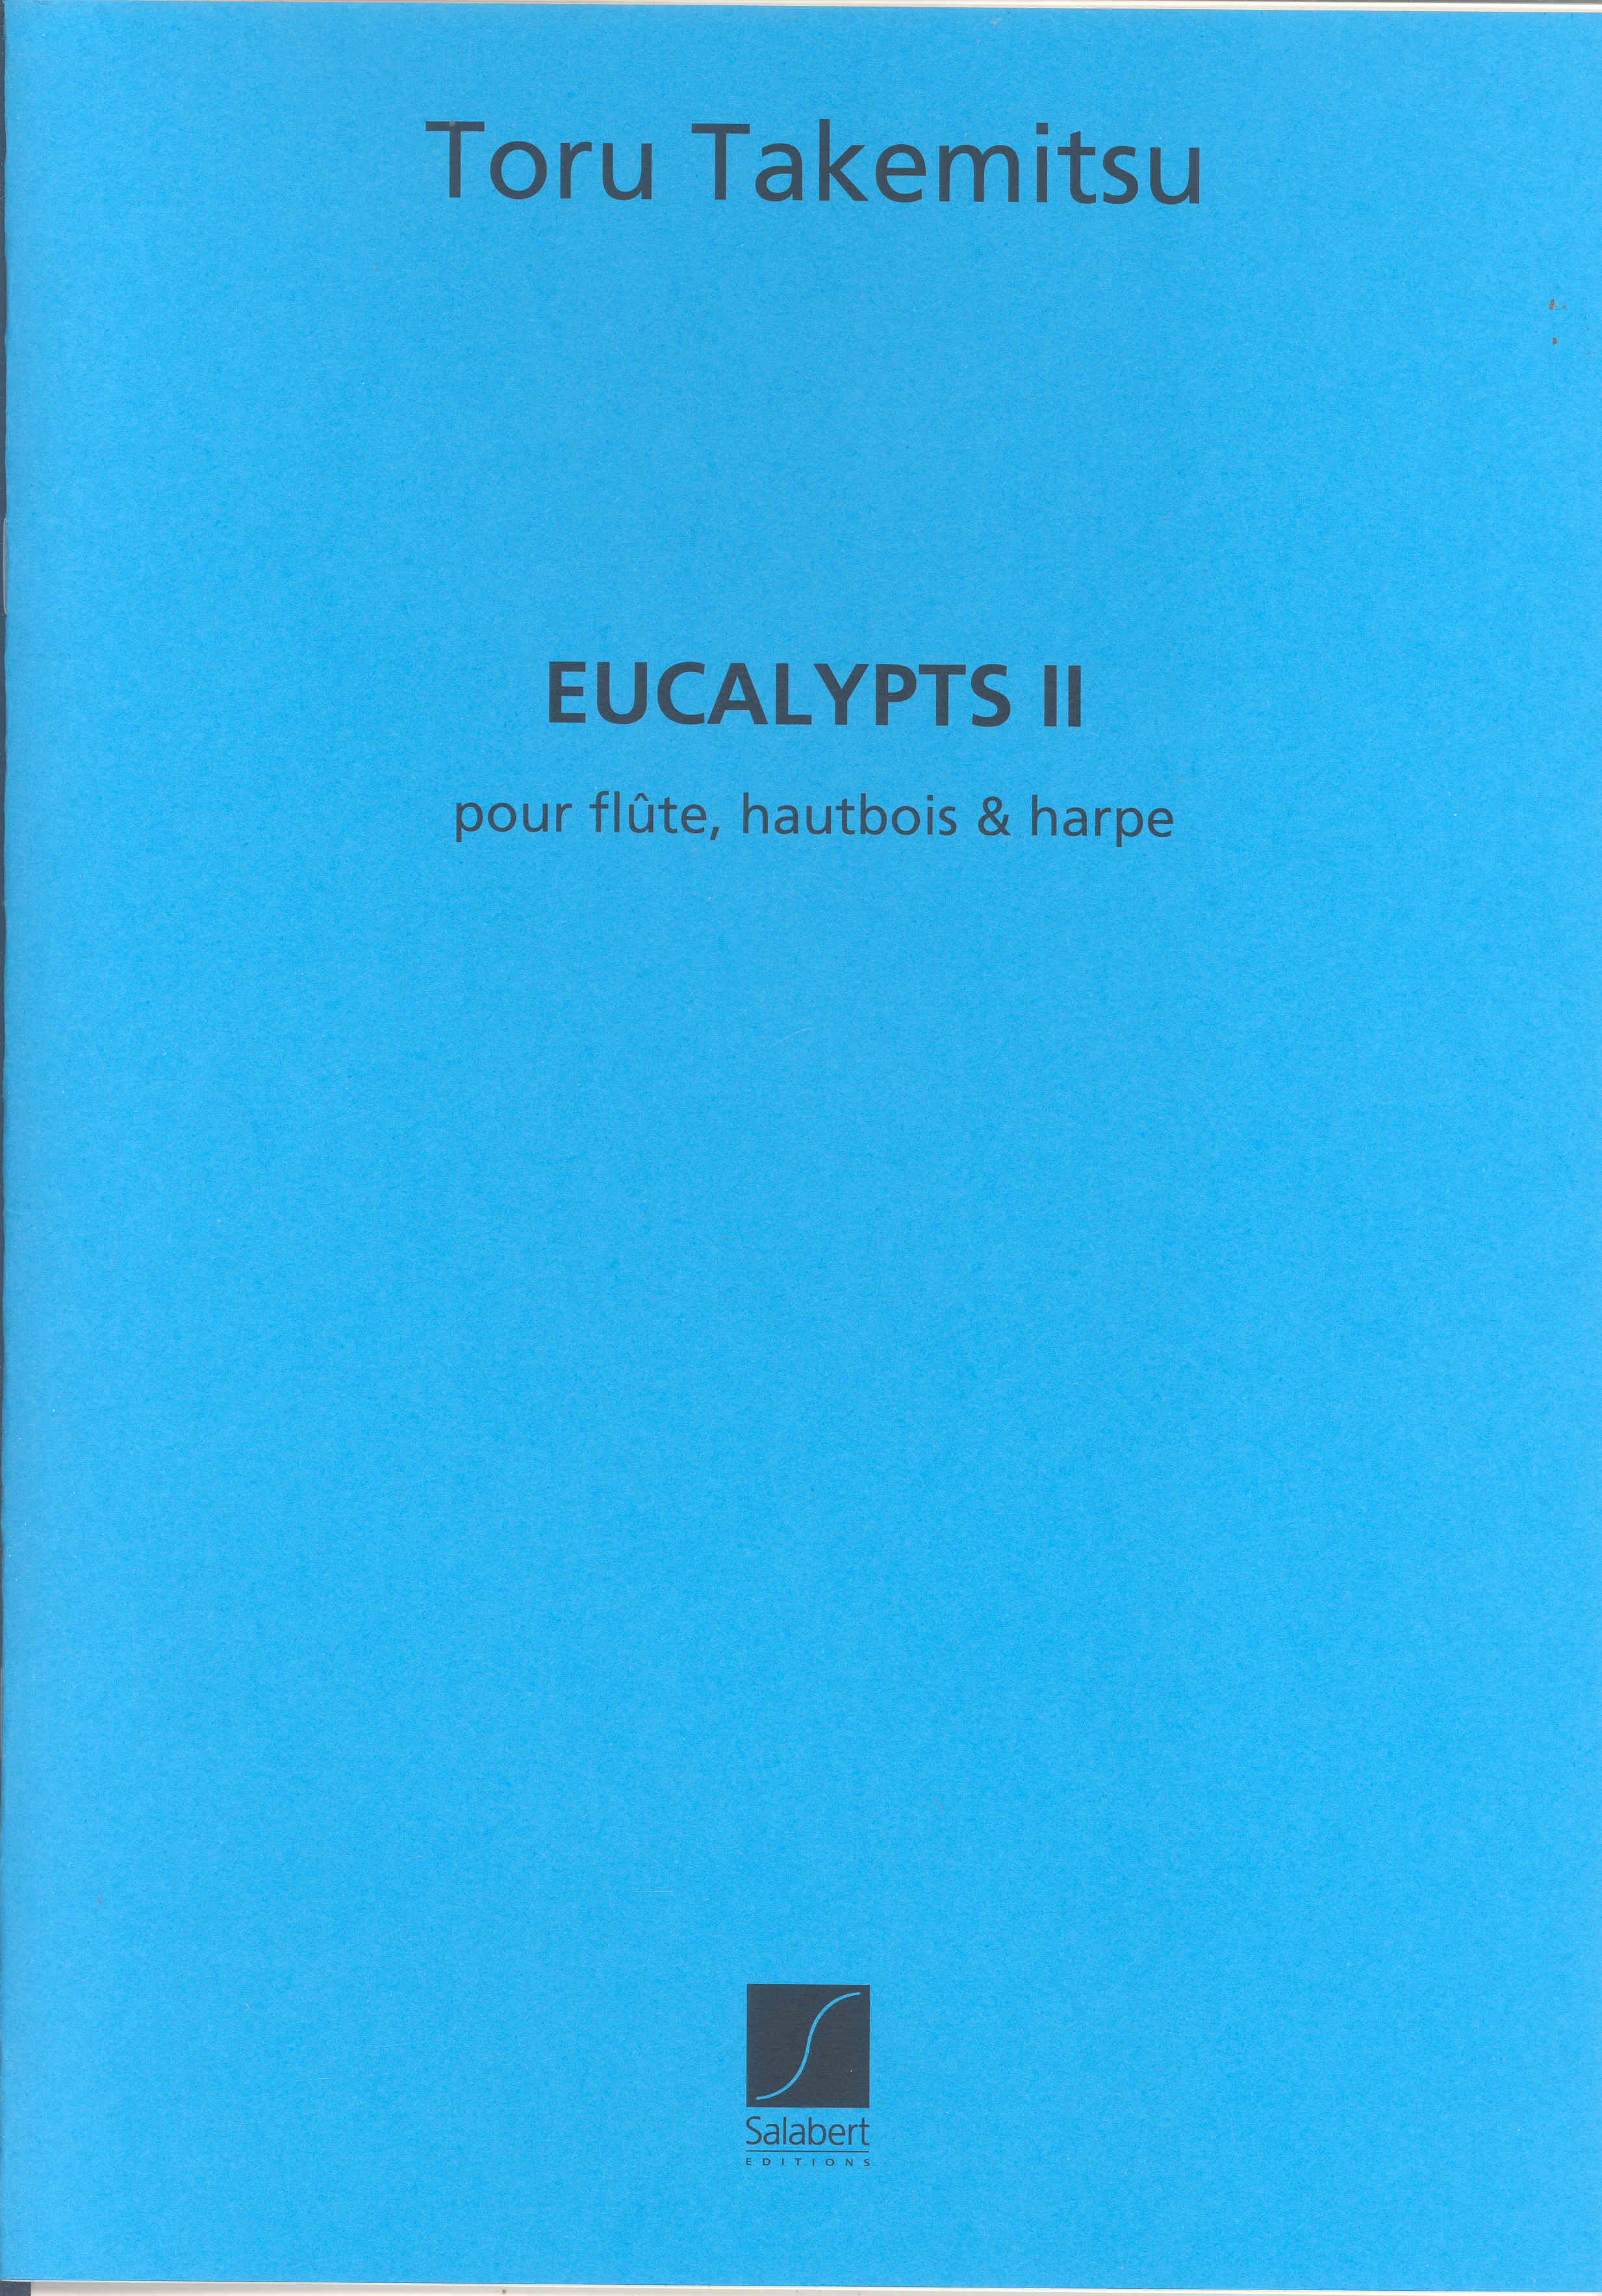 Takemitsu Eucalypts No 2 Flute, Oboe & Harp Parts Sheet Music Songbook